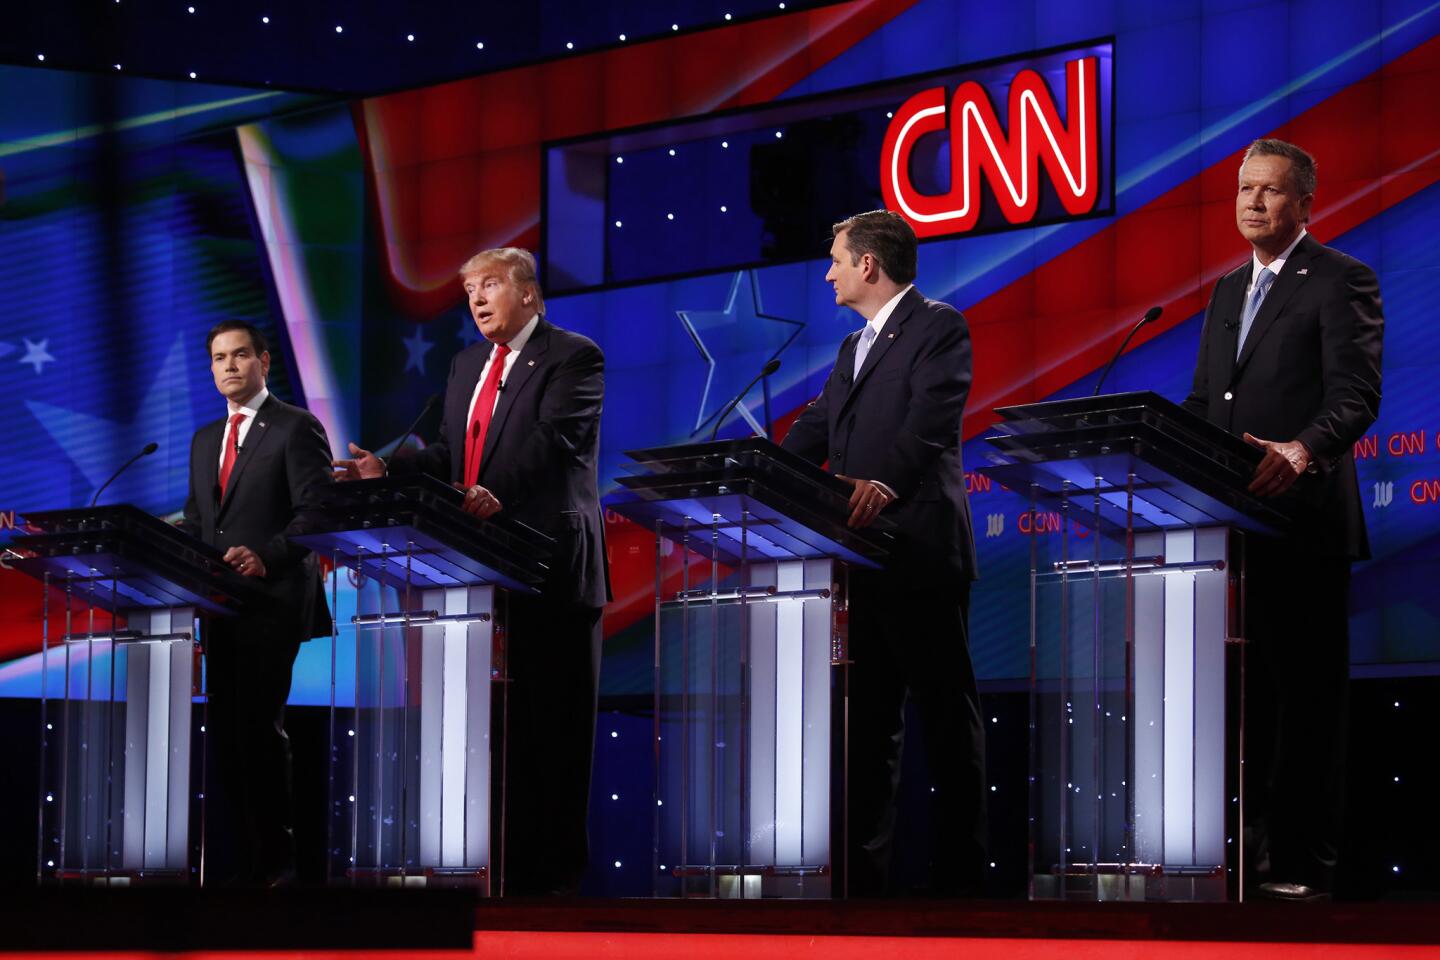 Marco Rubio, Donald Trump, Ted Cruz, and John Kasich